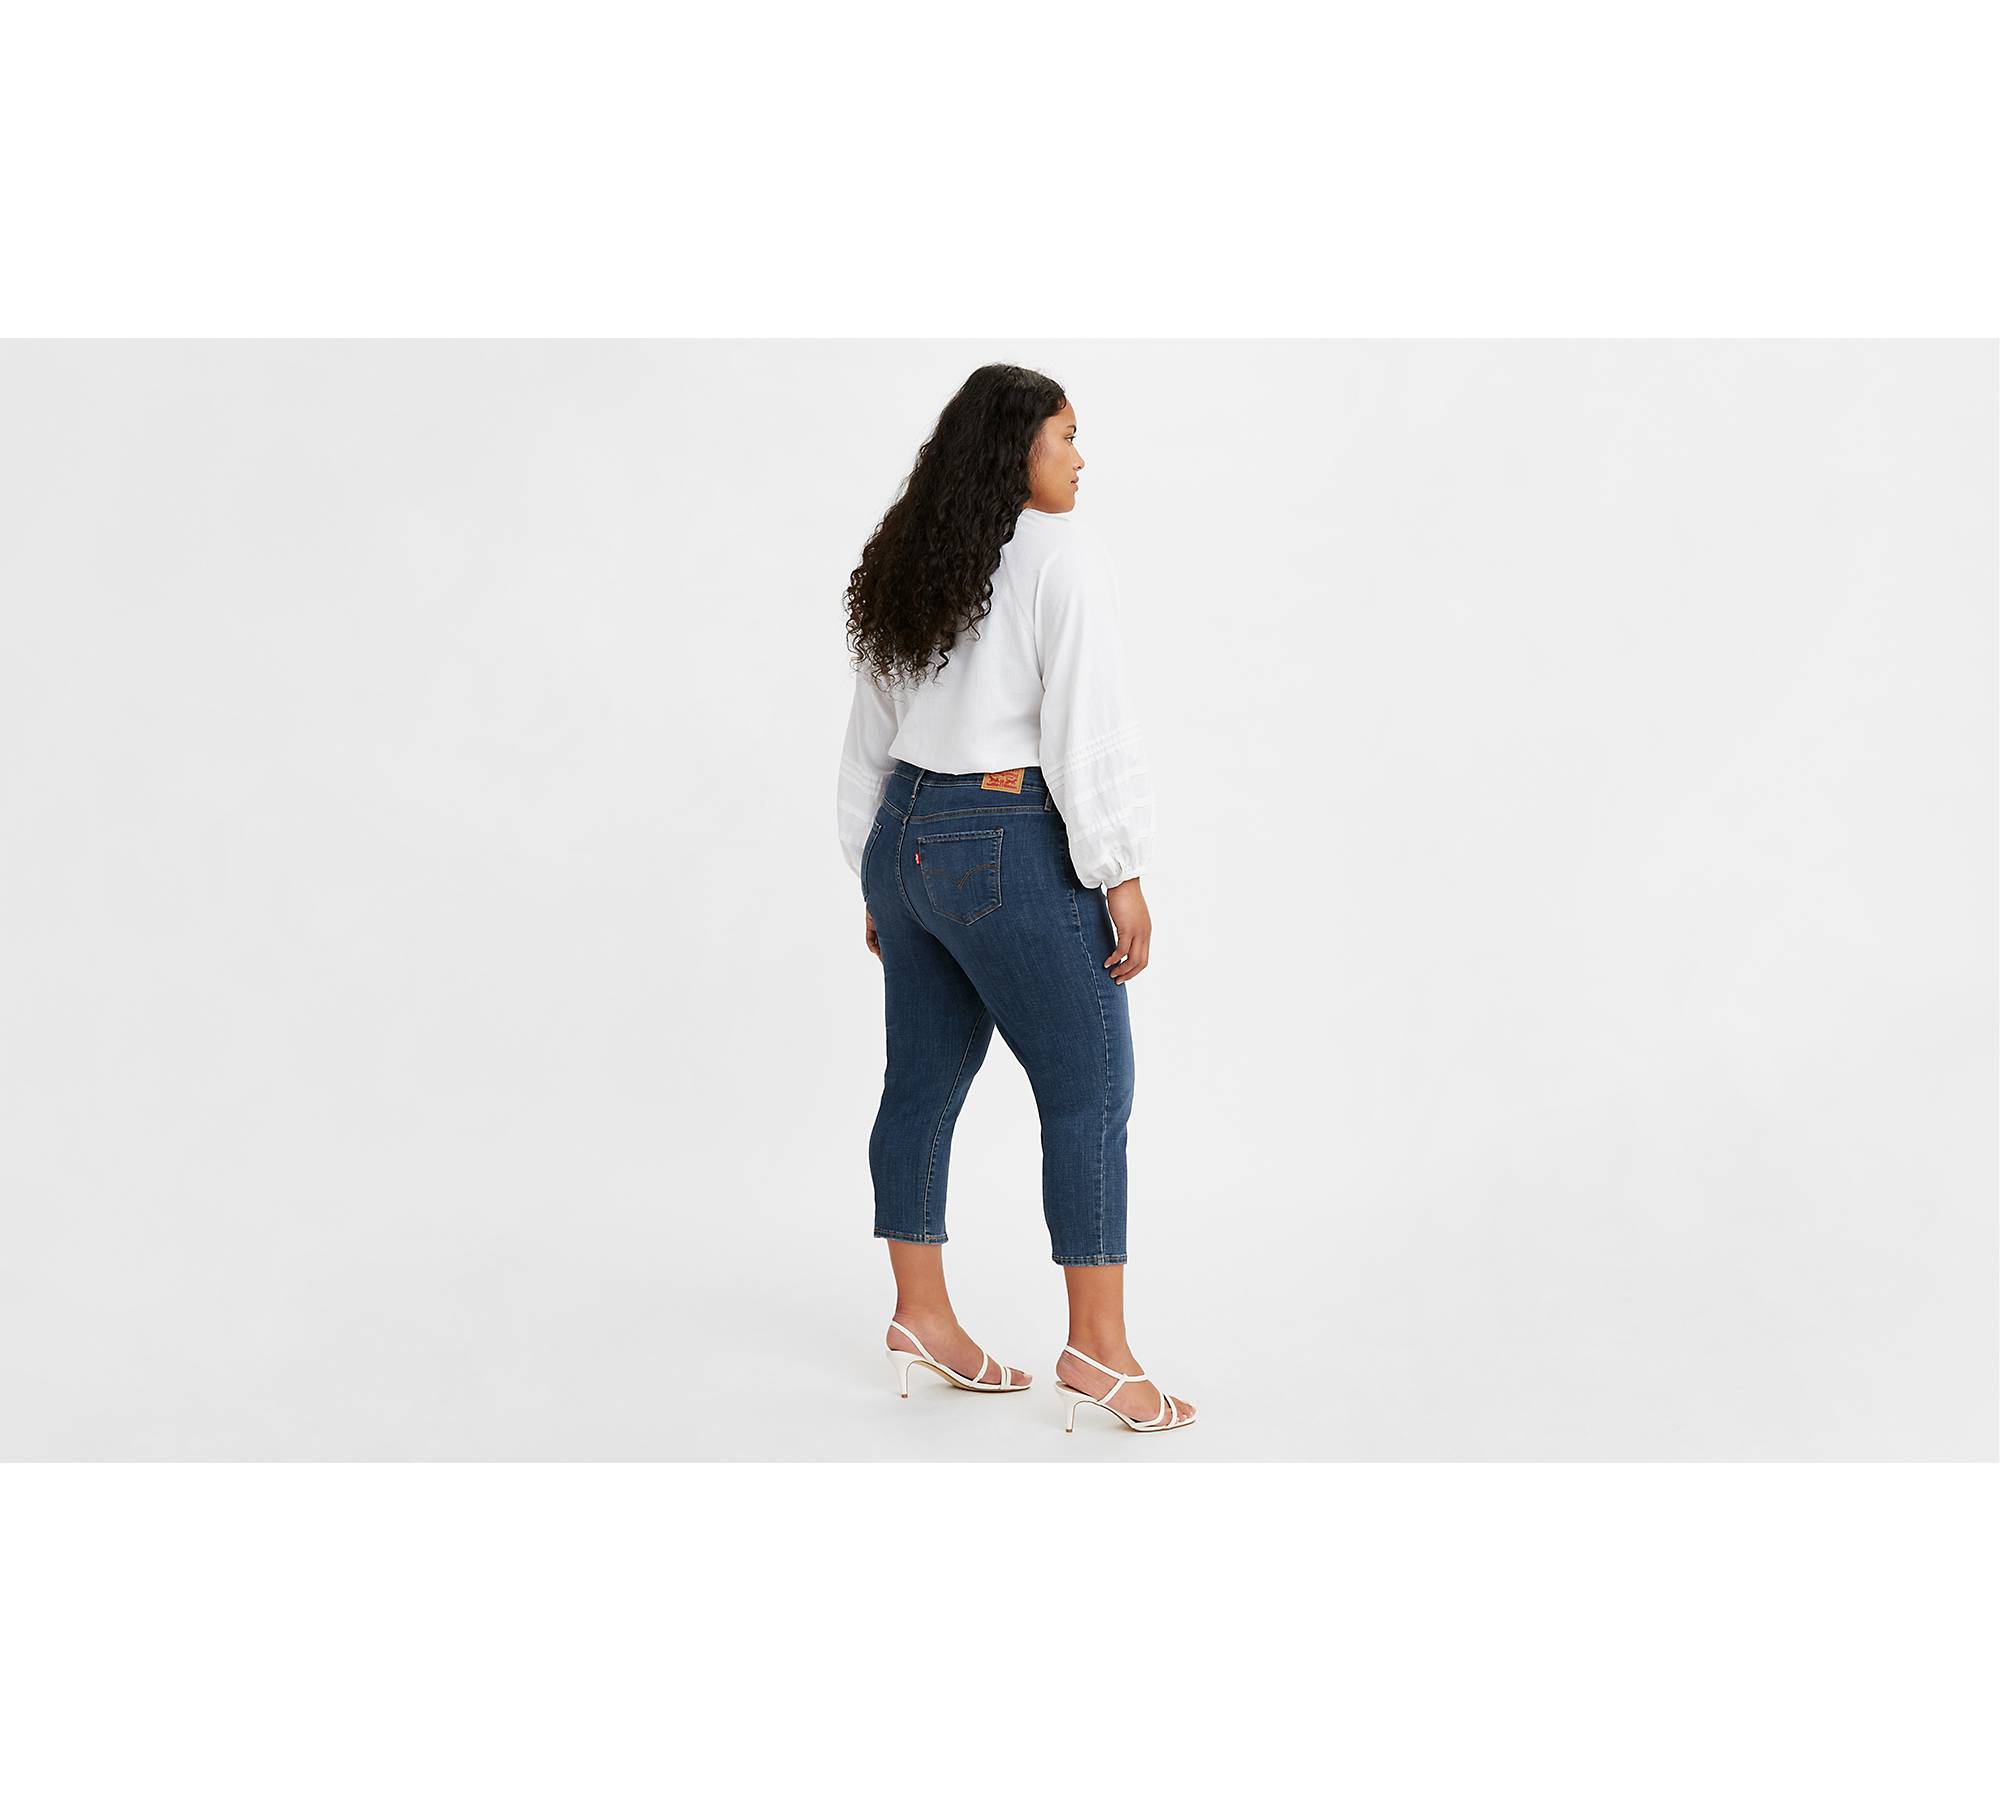 Women's Pants High Waist Jeans Plus Size Feminino Pants Capri